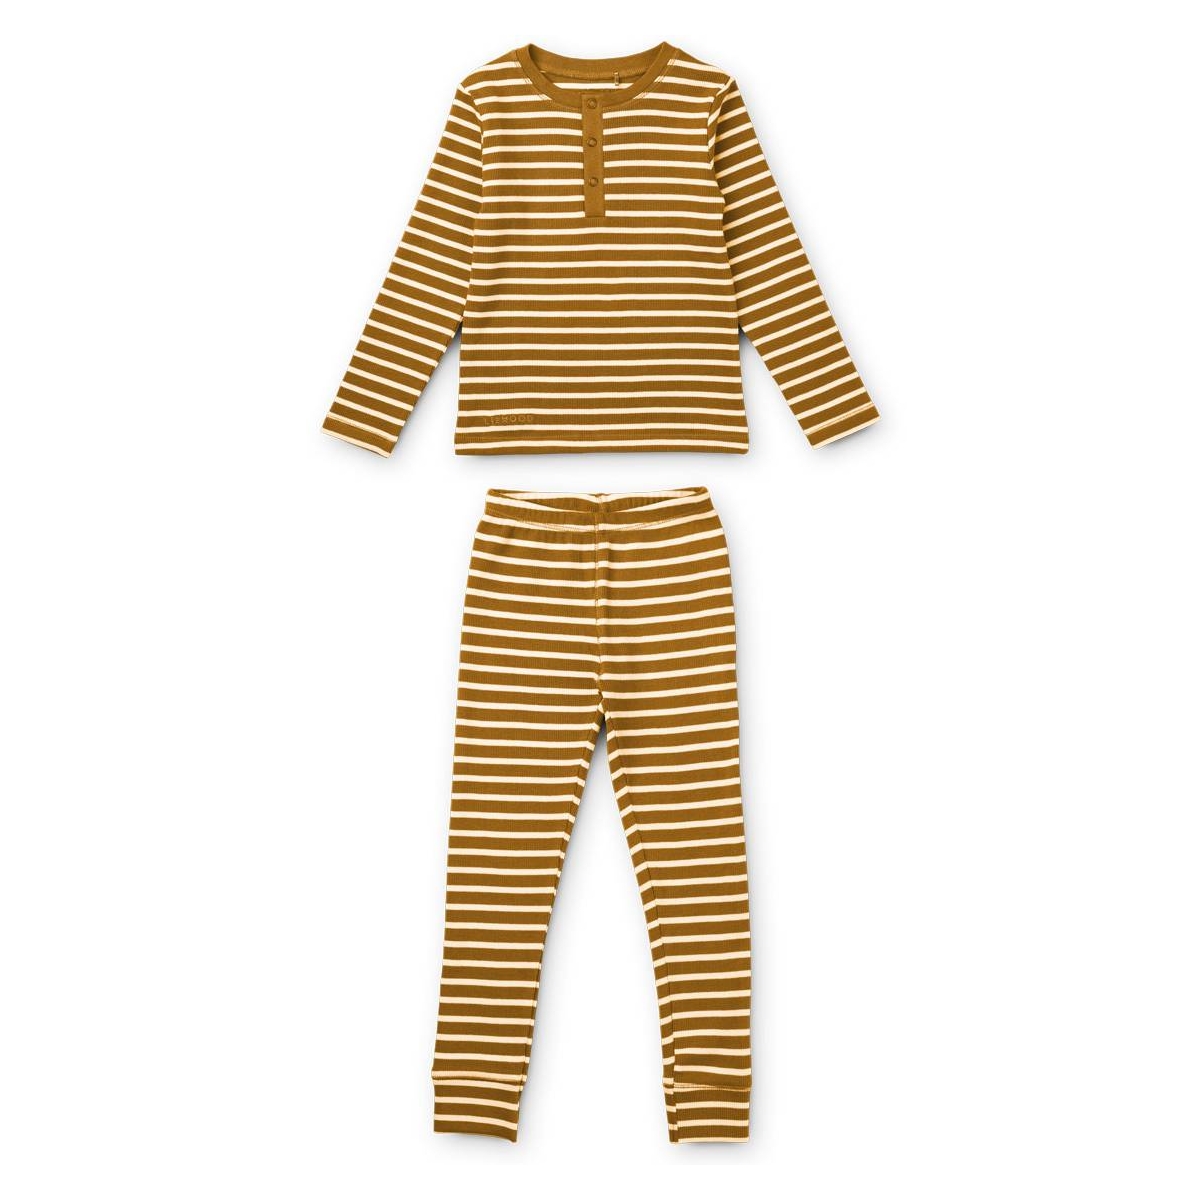 Liewood Pyjamas Set Wilhelm Golden Caramel/Sandy LW14304 